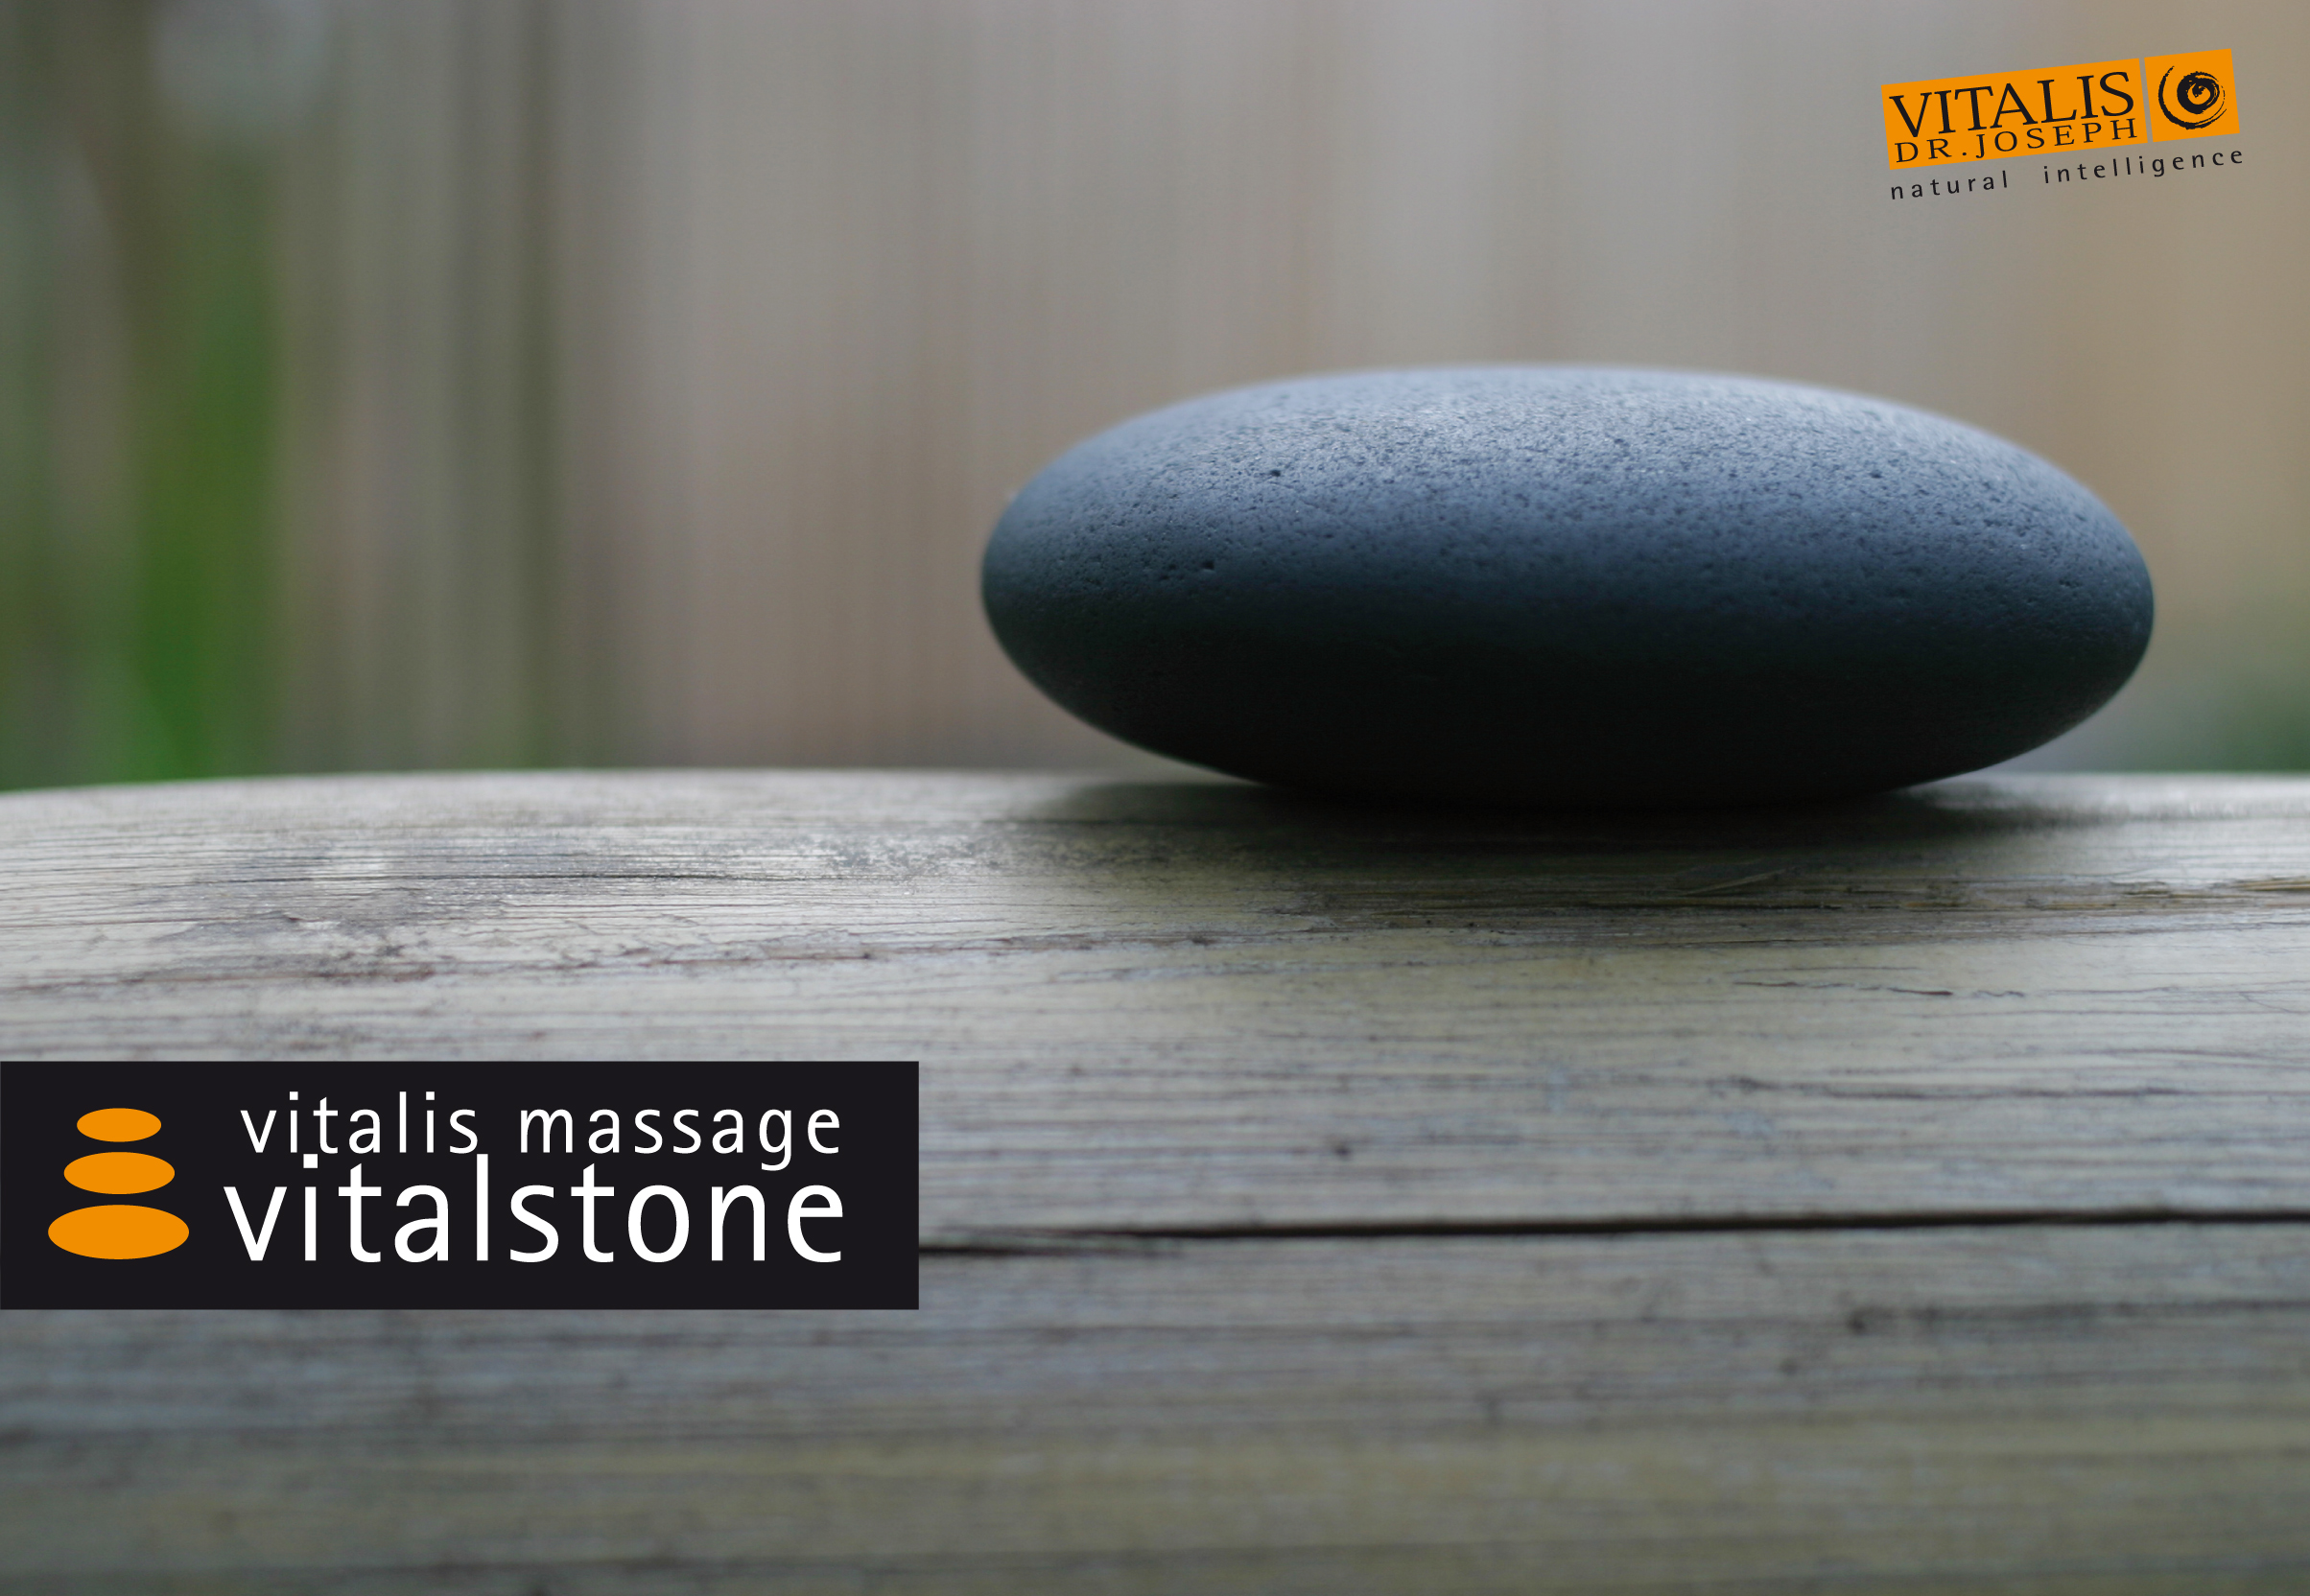 Image - Vitalis massage vitalstone